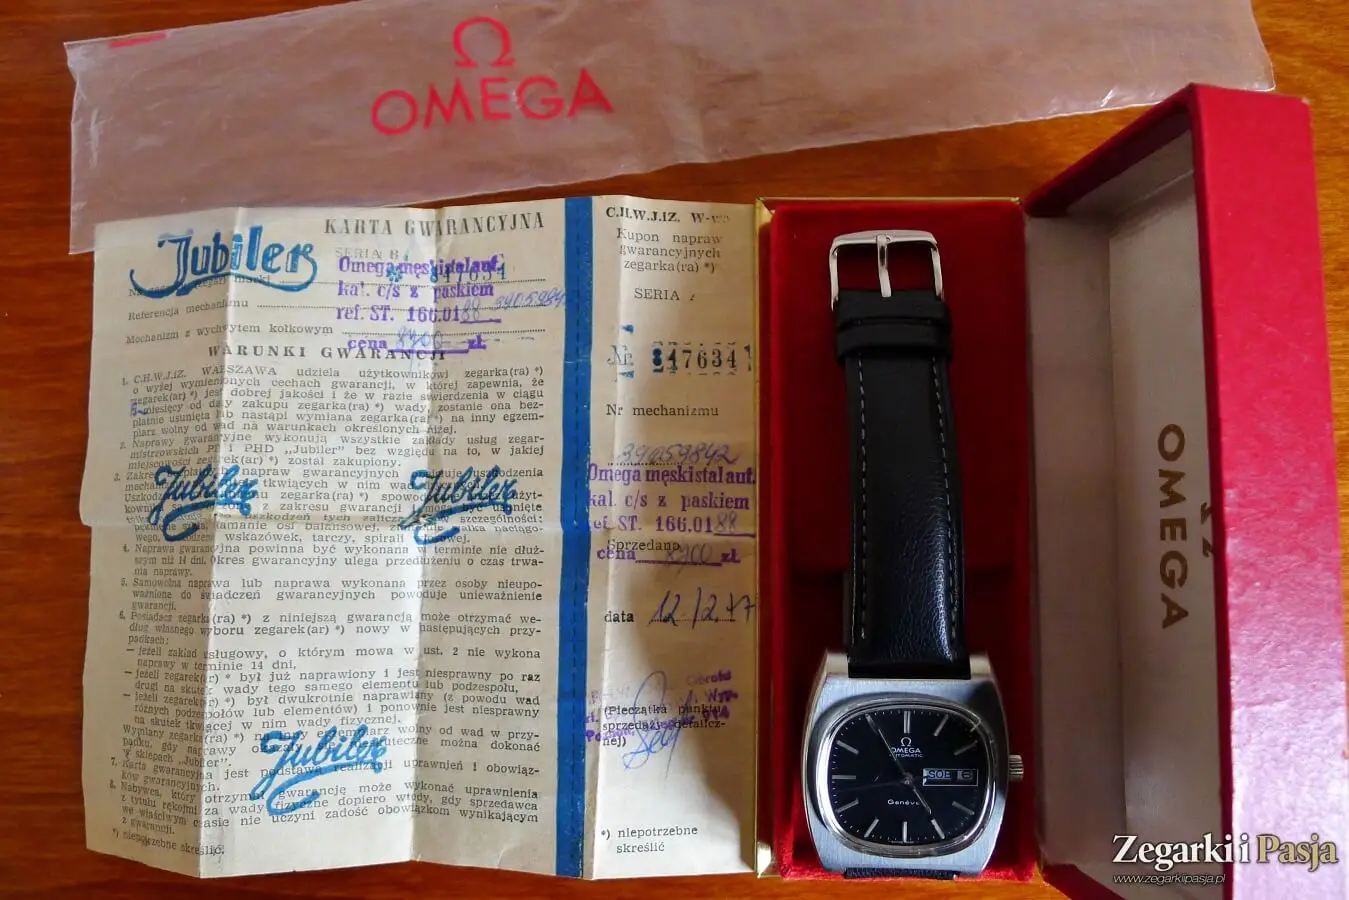 Zegarki vintage: Omega Geneve Automatic Day-Date – specjalna edycja na polski rynek 